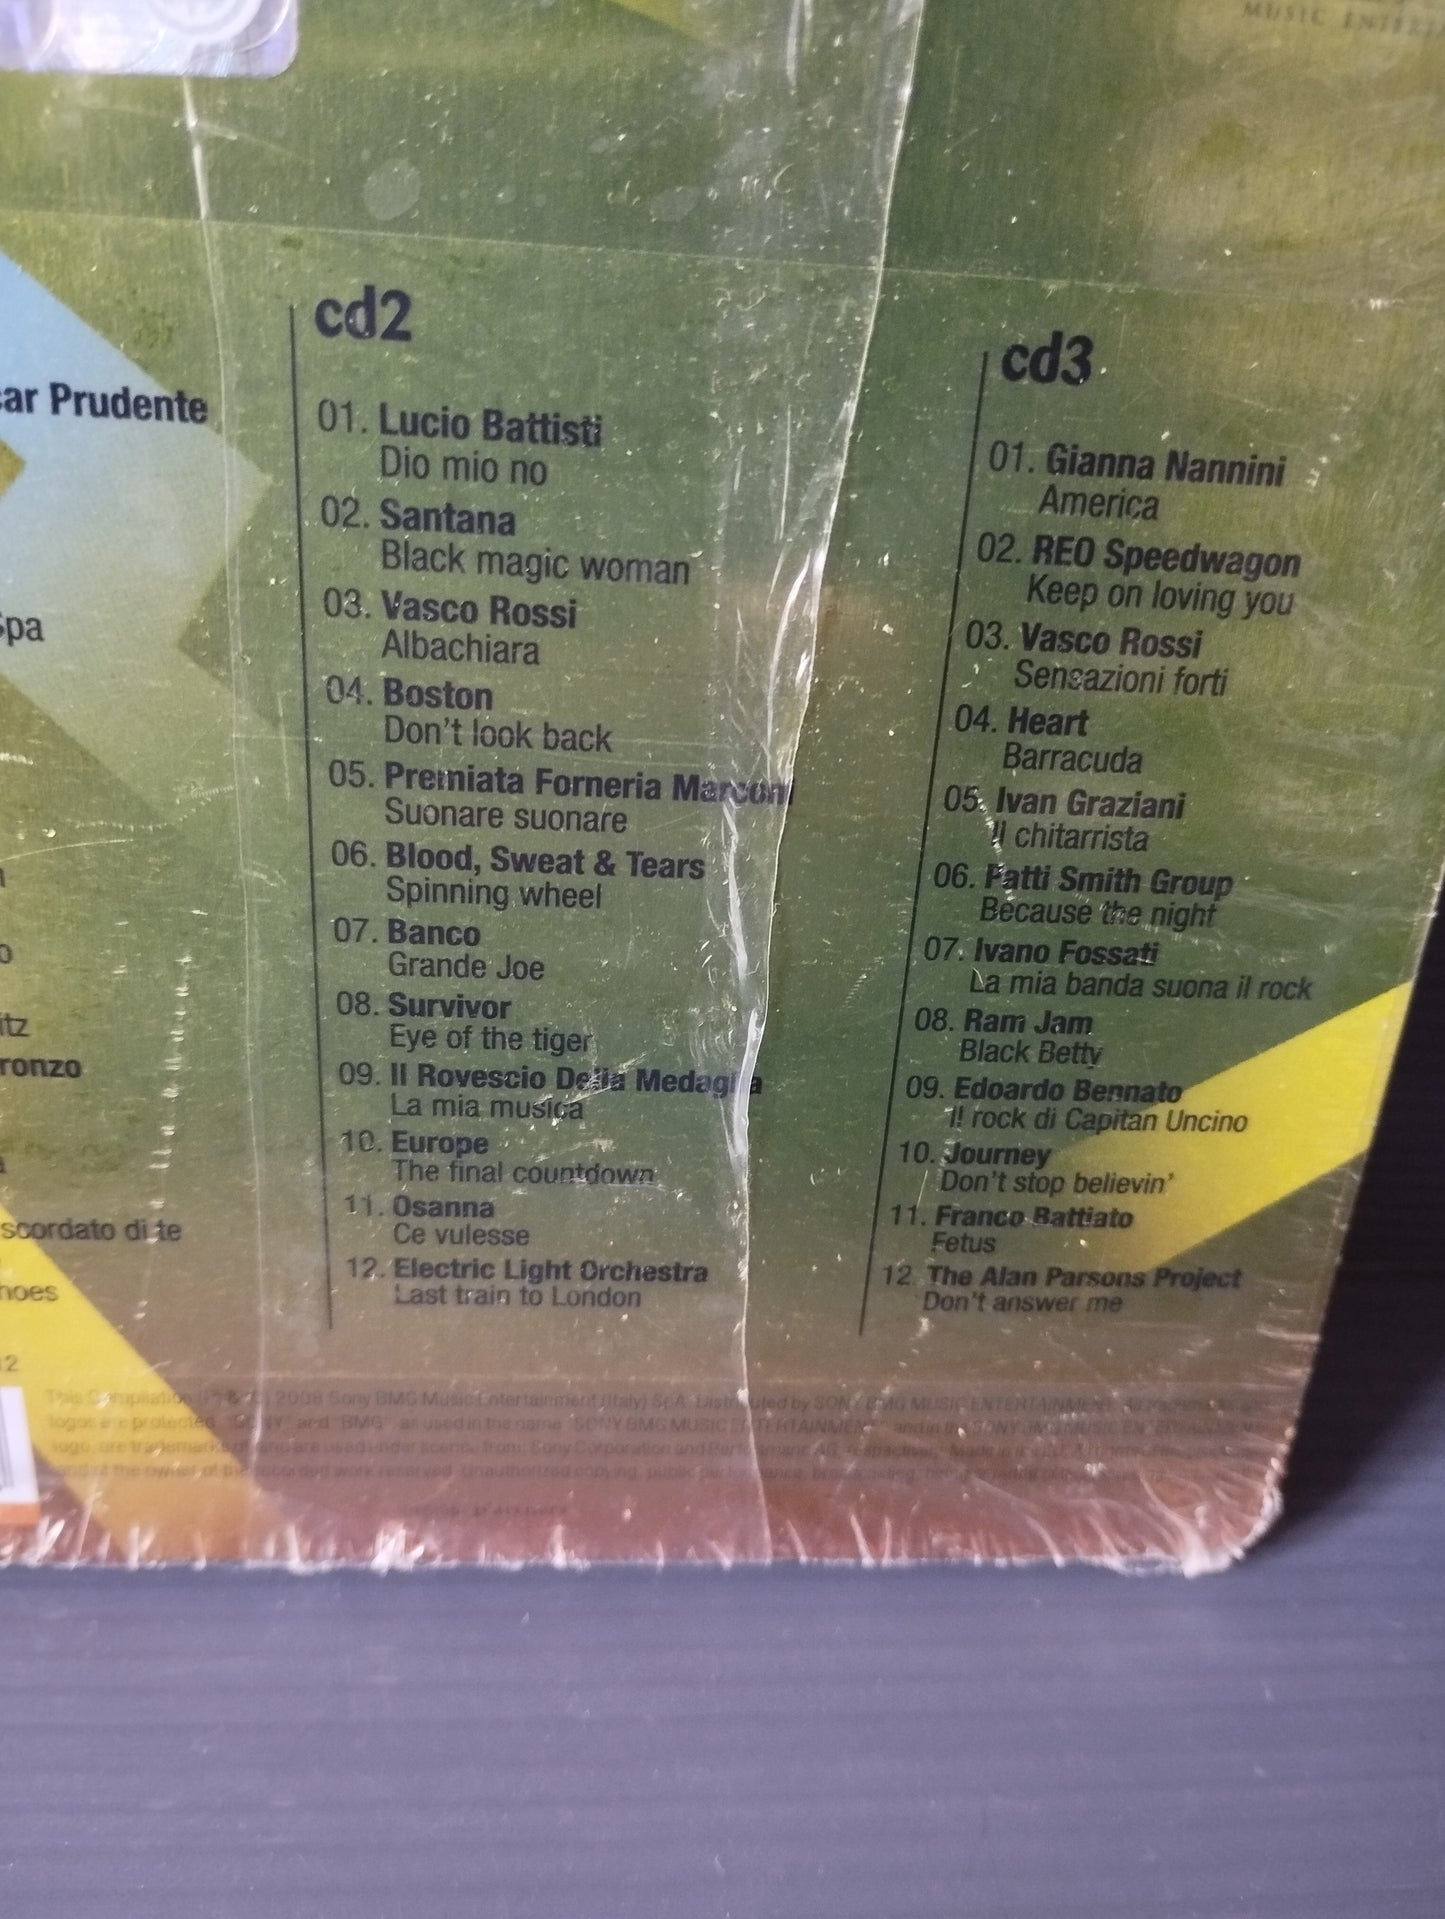 50 Years of Rock Music" 3 CD box set